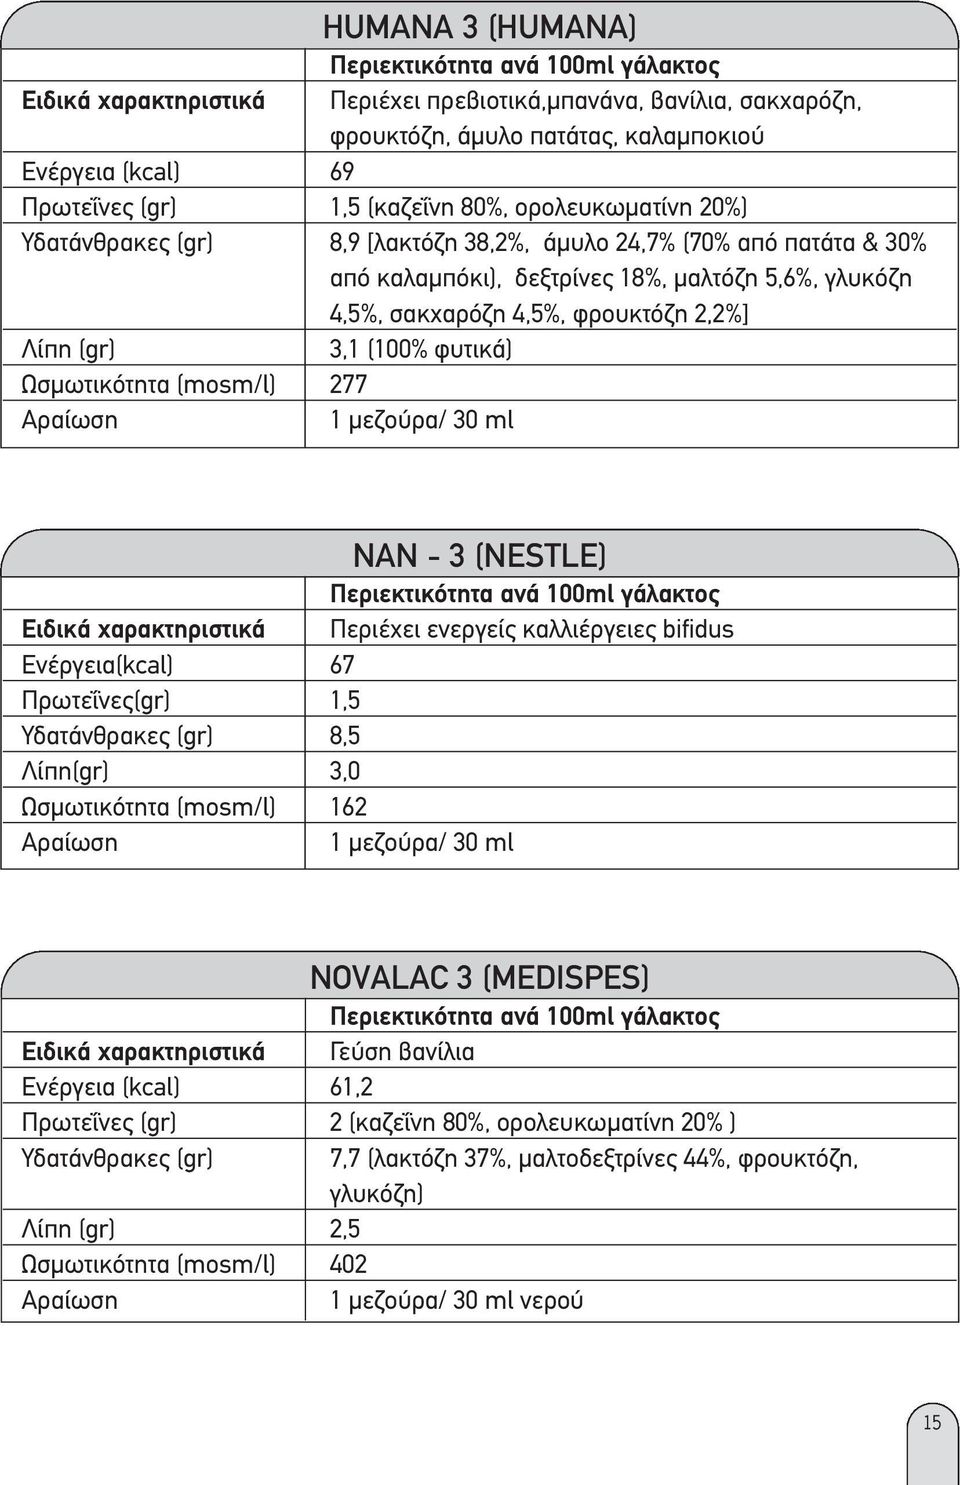 (mosm/l) 277 ΝΑΝ - 3 (NESTLE) Ειδικά χαρακτηριστικά Περιέχει ενεργείς καλλιέργειες bifidus Ενέργεια(kcal) 67 Πρωτεΐνες(gr) 1,5 Υδατάνθρακες (gr) 8,5 Λίπη(gr) 3,0 Ωσµωτικότητα (mosm/l) 162 NOVALAC 3